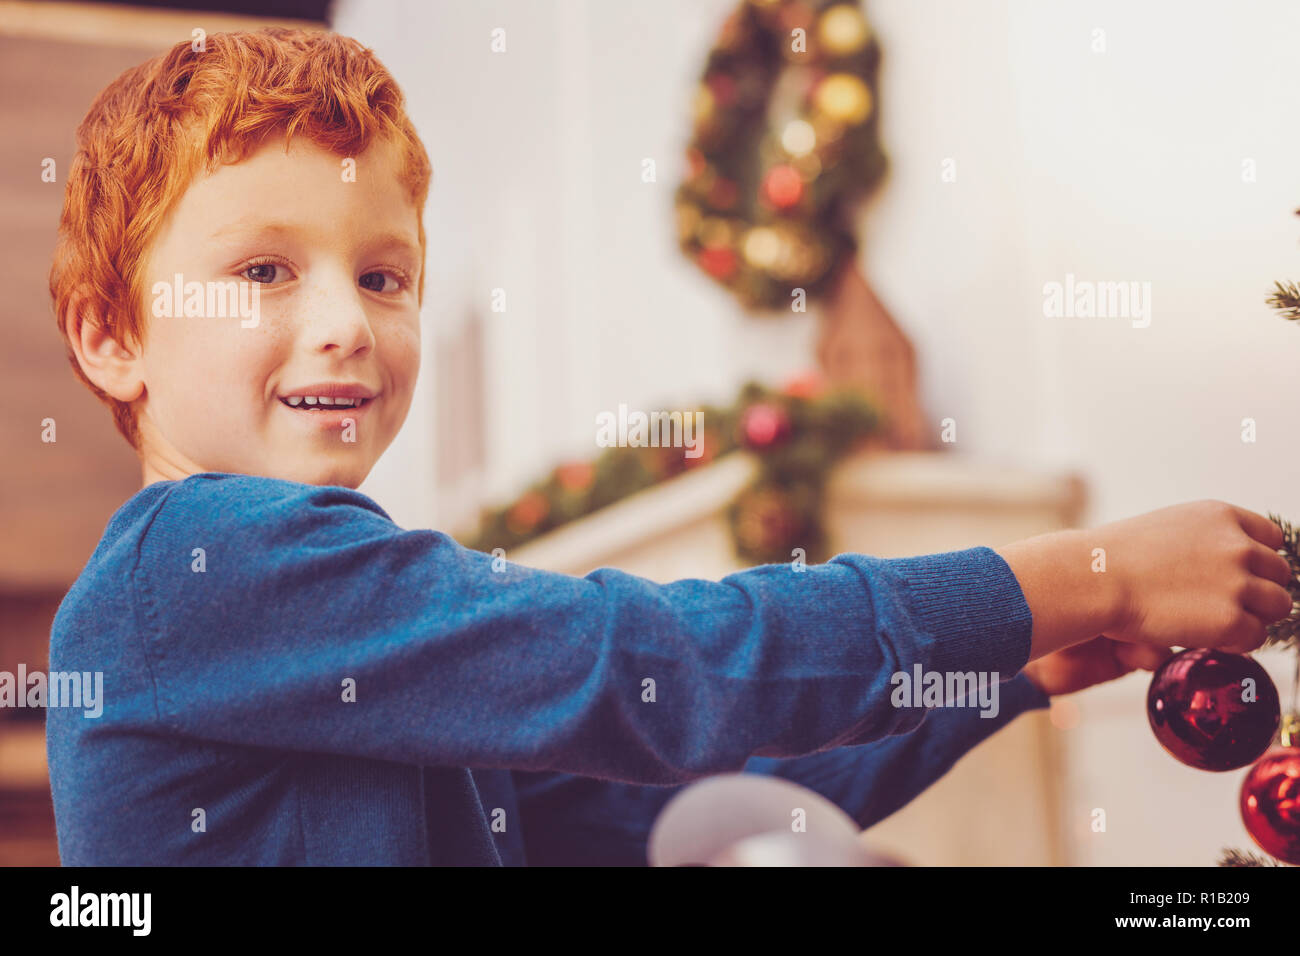 Cheerful preteen boy putting decorations on Christmas tree Stock Photo